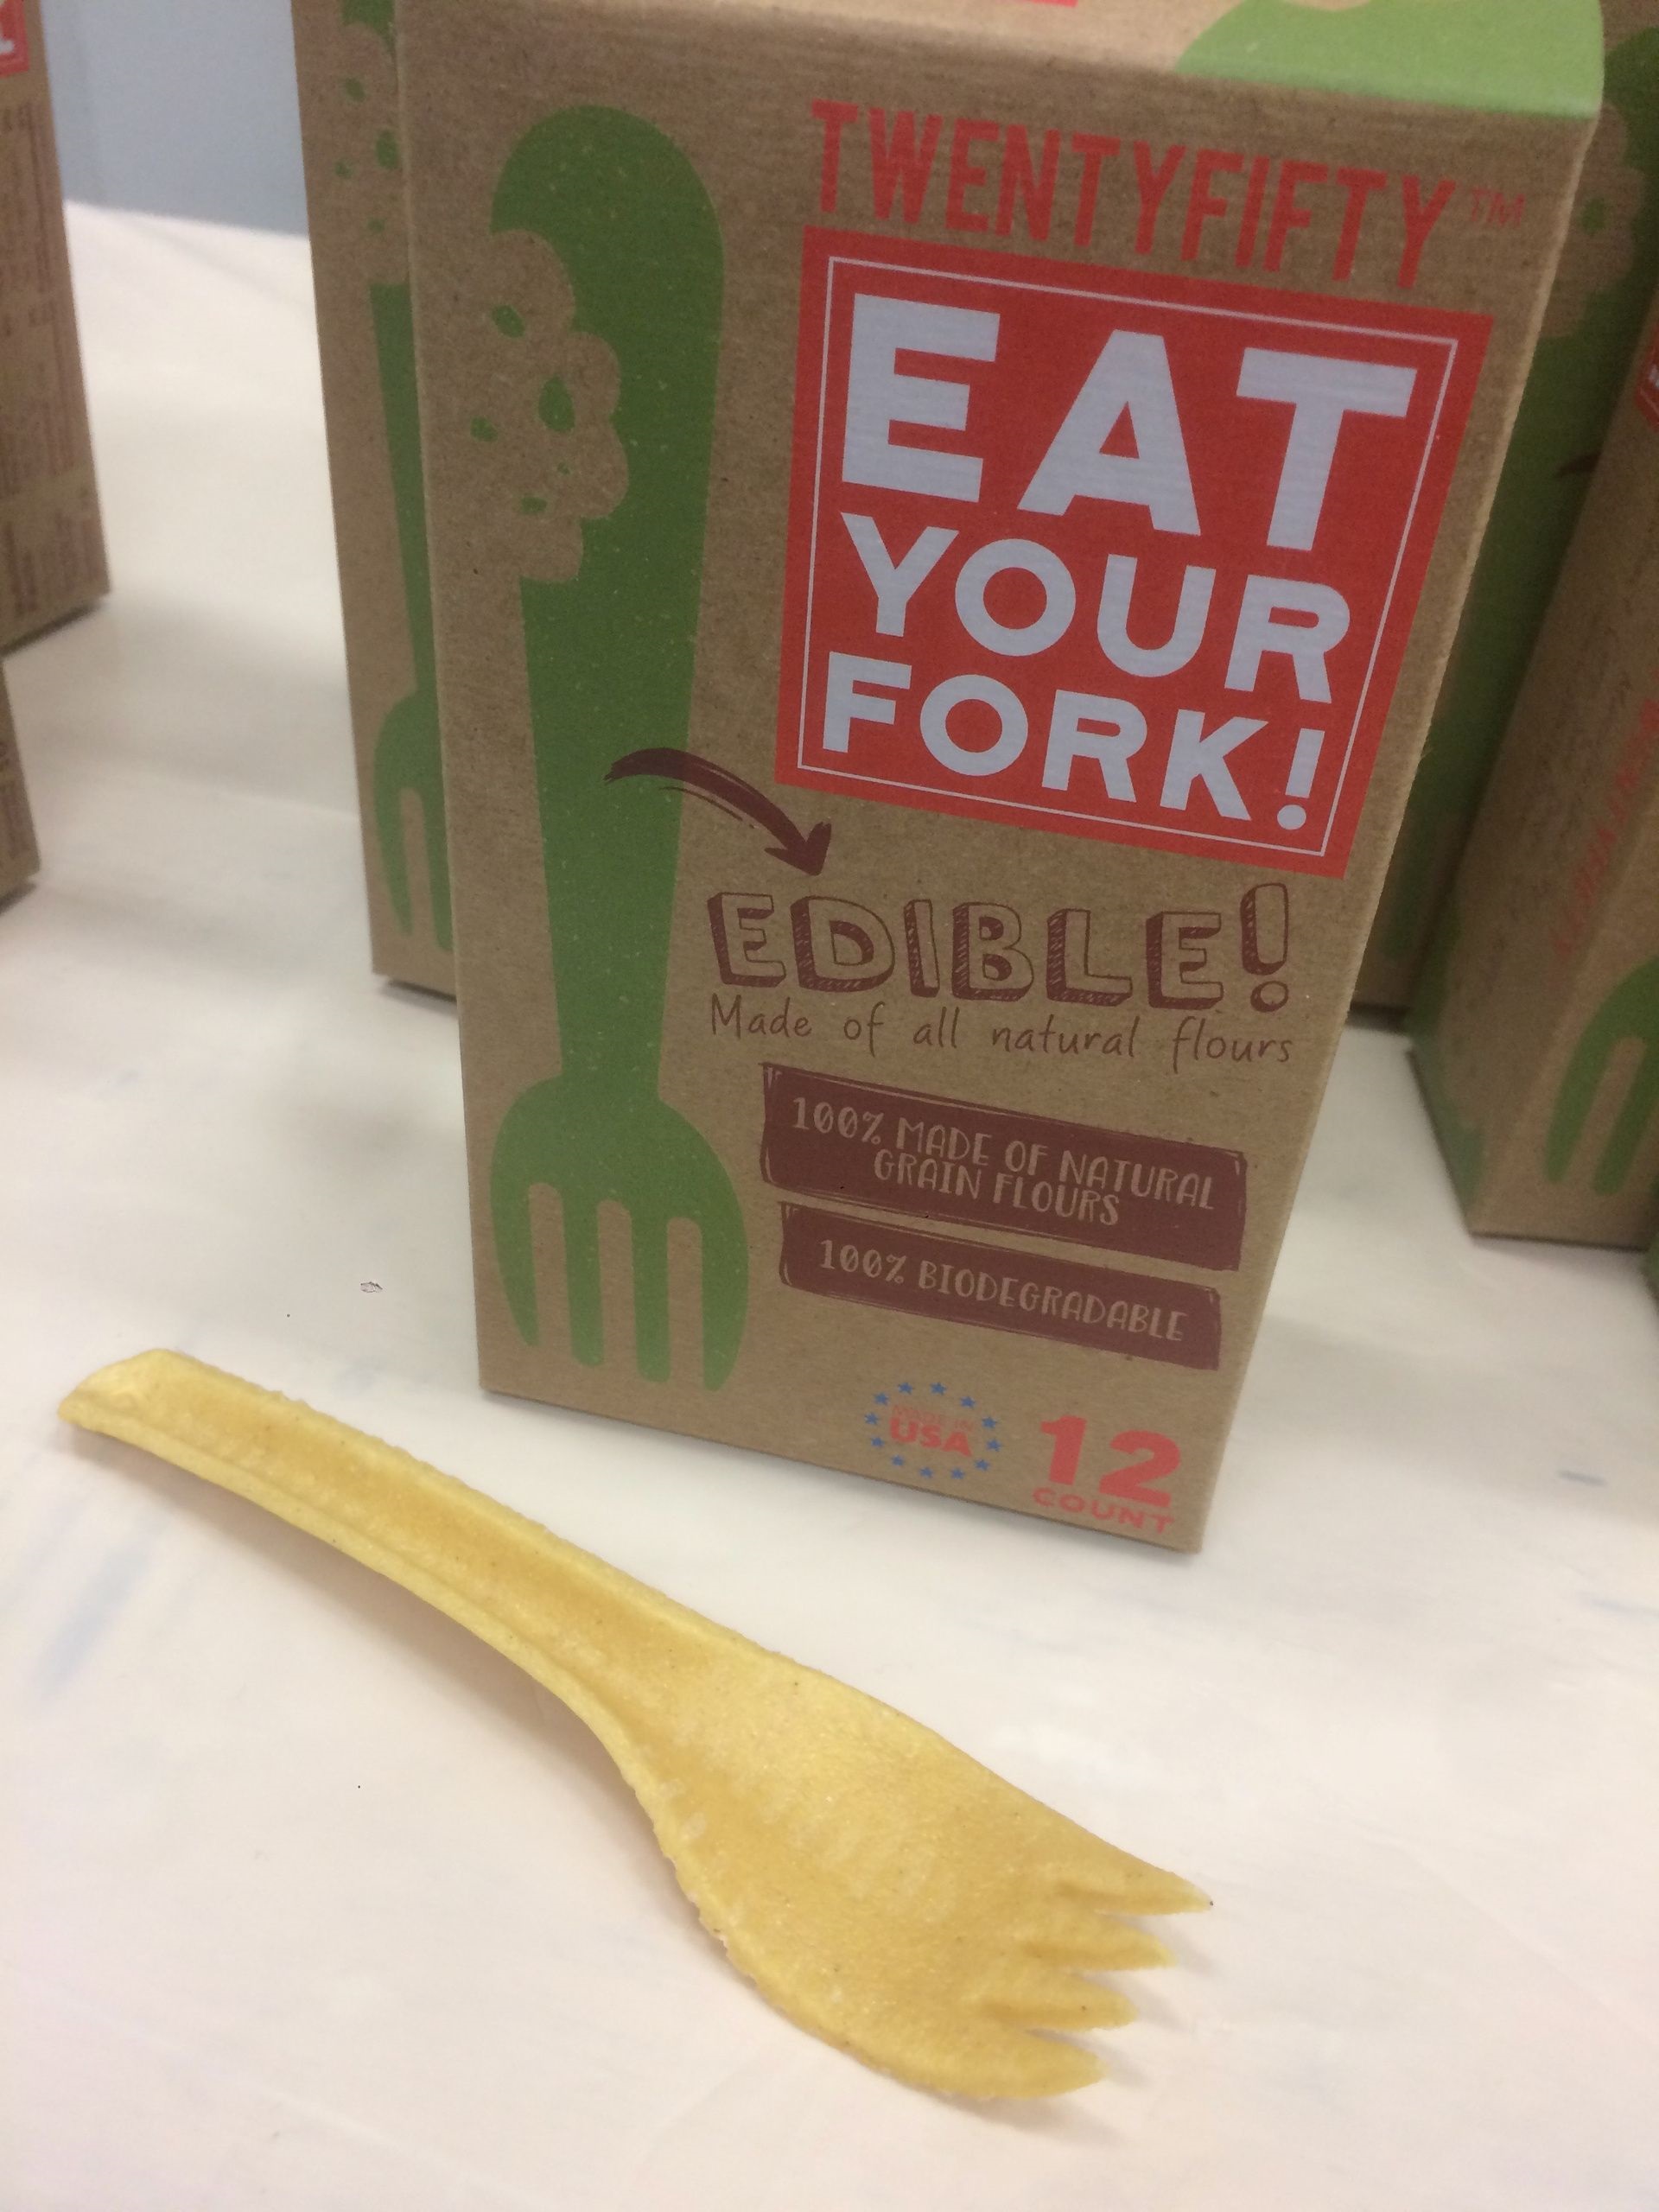 edible fork, edible spoon, eco-friendly utensils, twenty fifty, innovative utensils